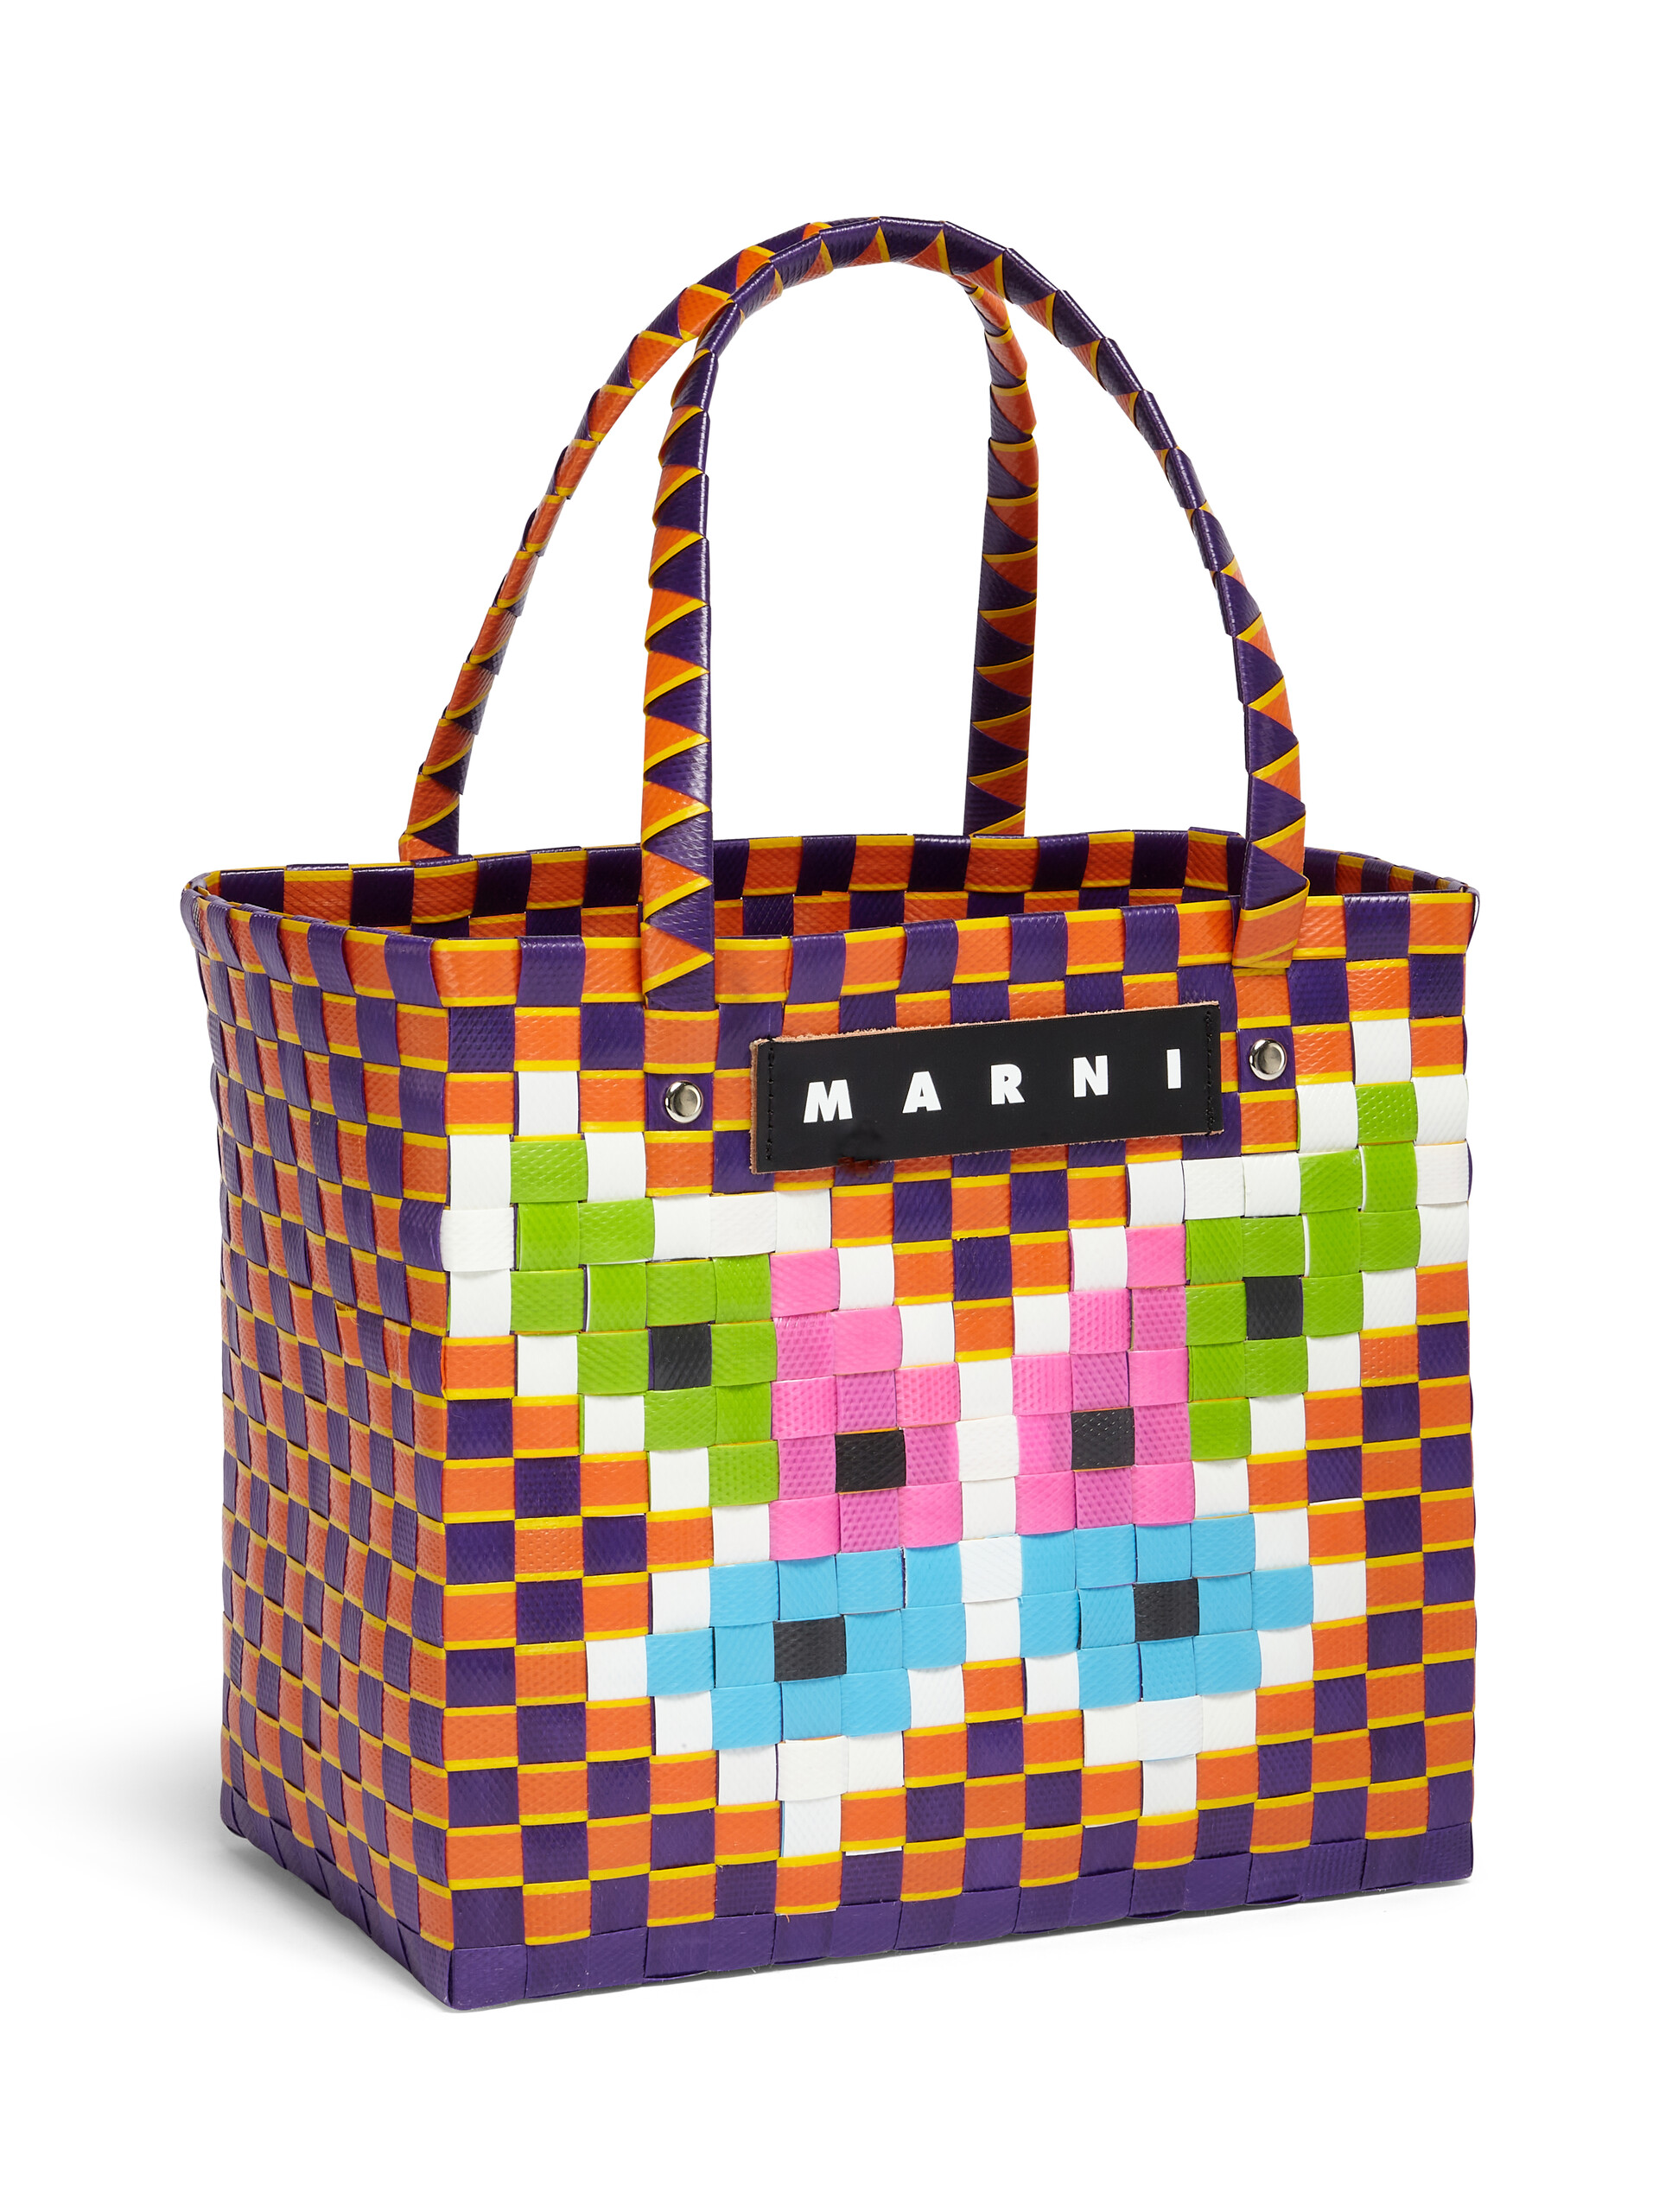 MARNI MARKET FLOWER MINI BASKET bag in orange butterfly motif - Shopping Bags - Image 4